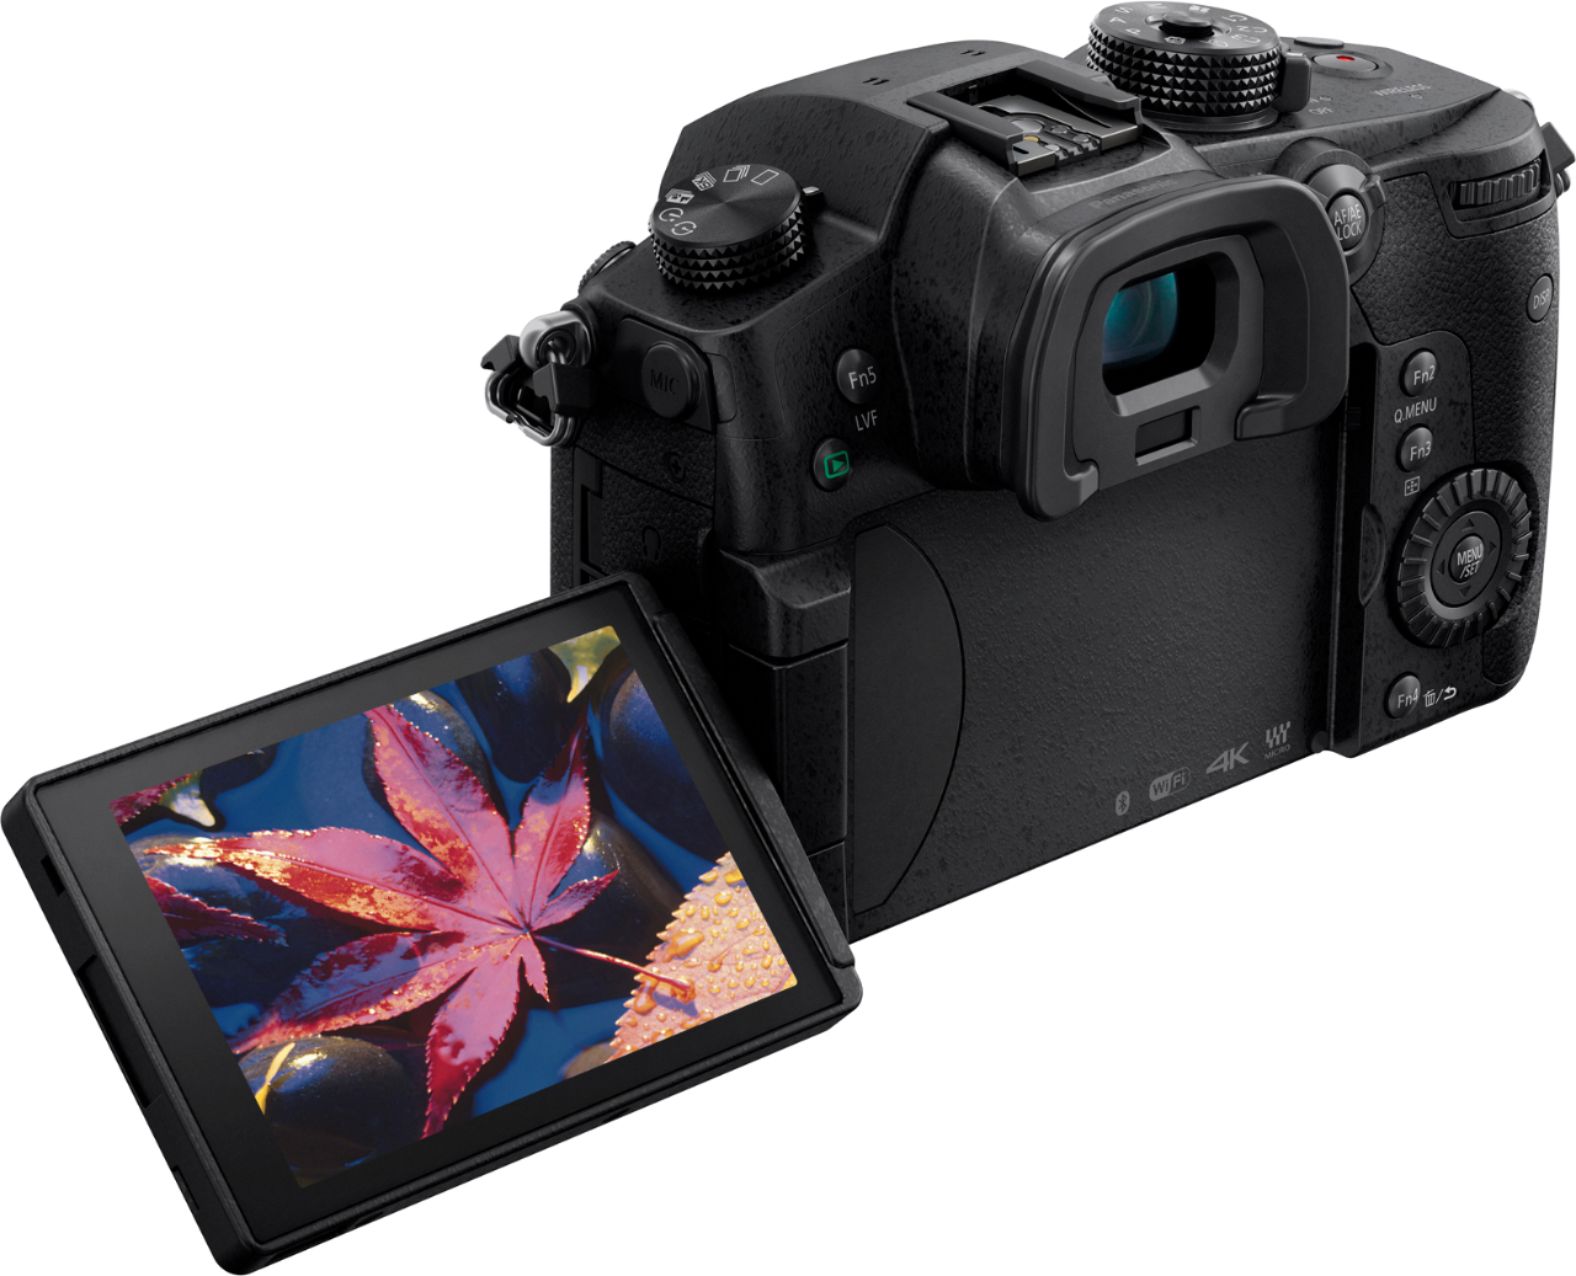 adviseren Interessant Spuug uit Panasonic LUMIX GH5 Mirrorless 4K Photo Digital Camera (Body Only)  DC-GH5KBODY Black DC-GH5KBODY - Best Buy